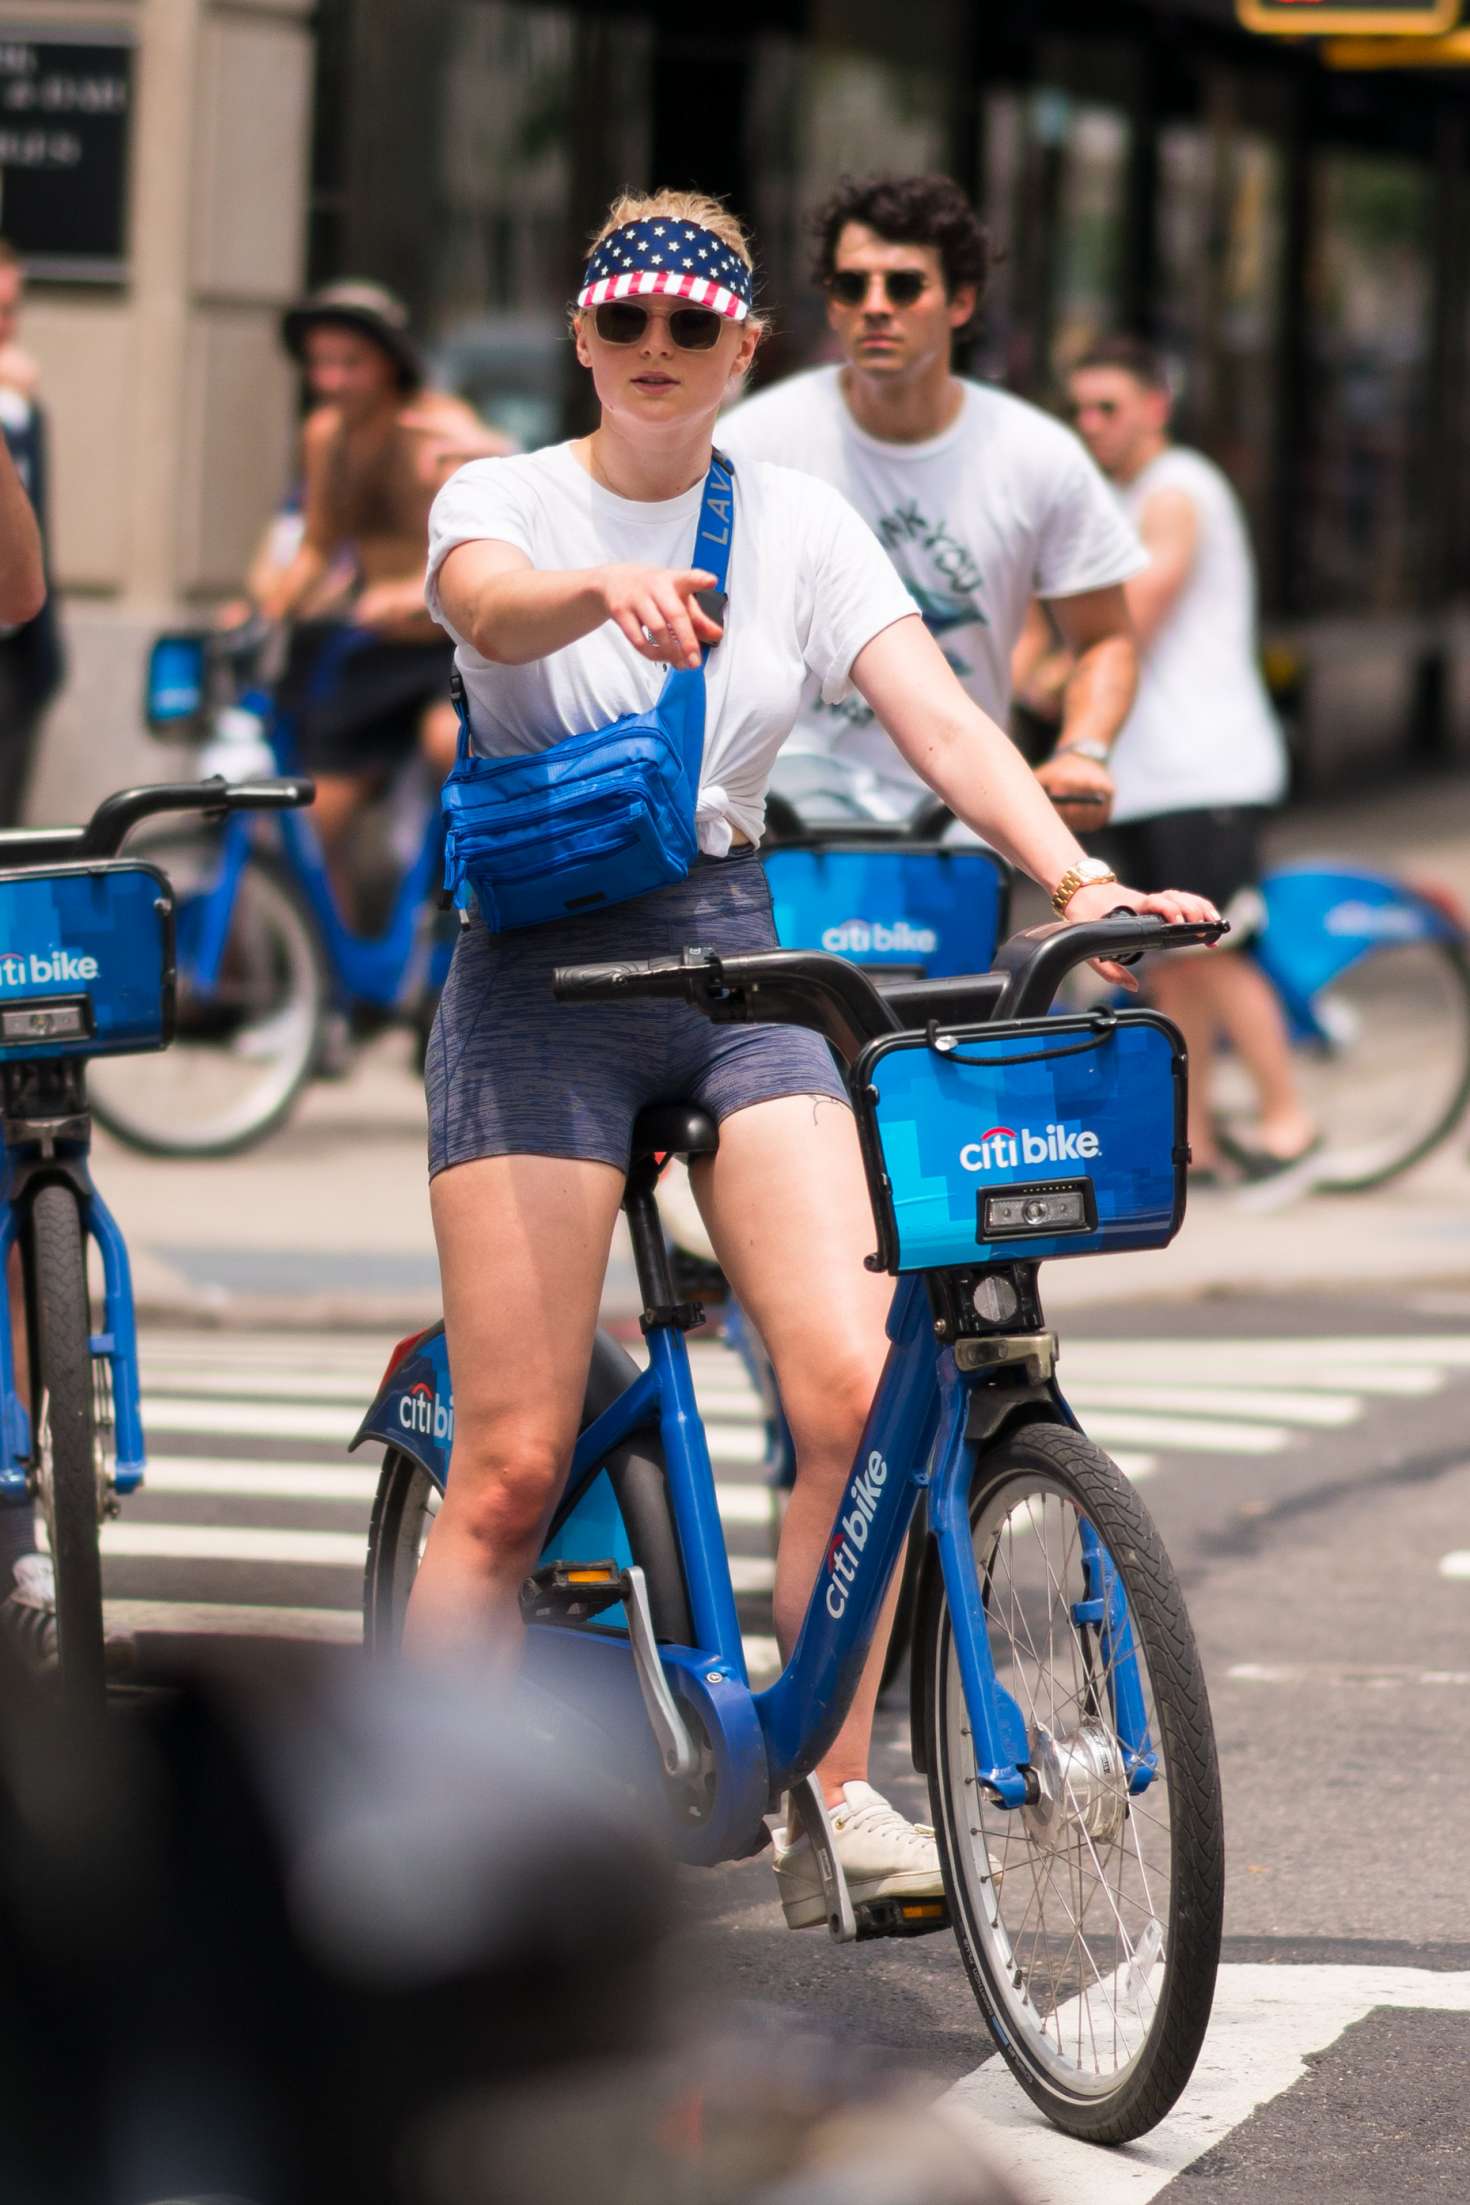 Sophie Turner Priyanka Chopra Joe and Nick Jonas â€“ Go for a ride on Citibikes in NYC